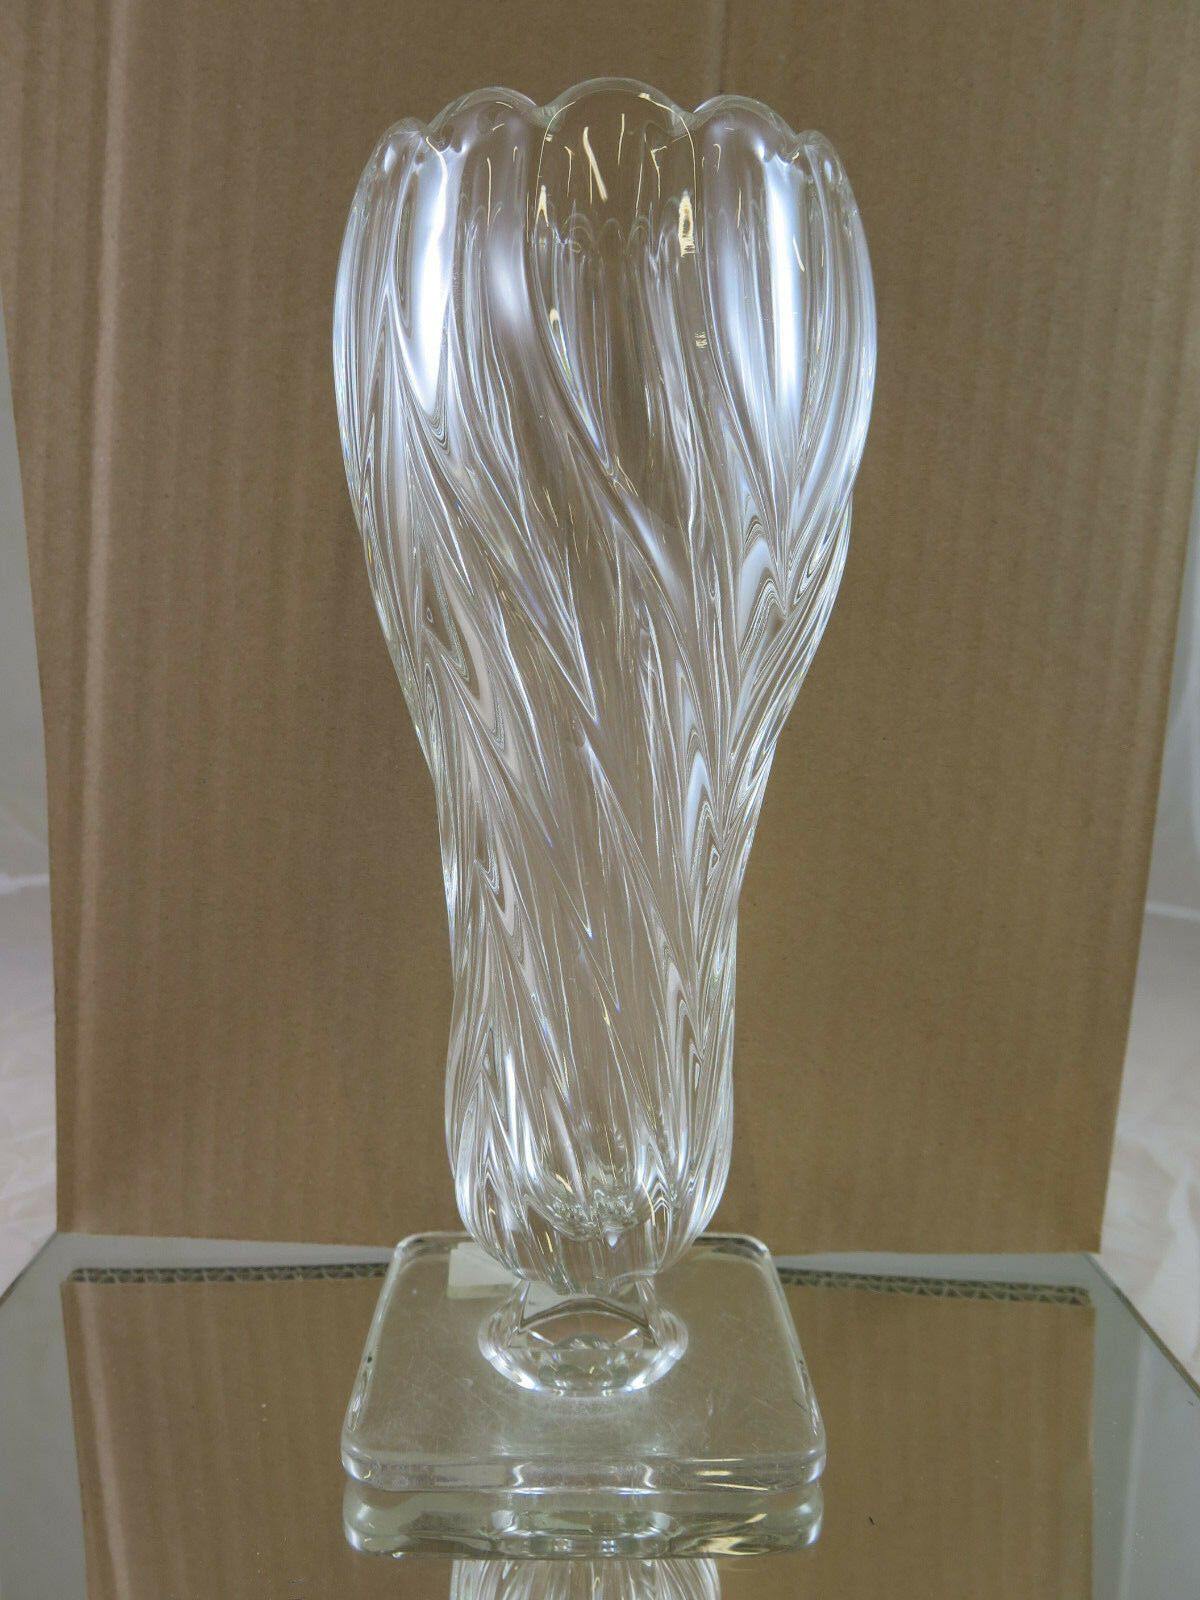 VASO IN VETRO DESIGN VINTAGE Josef Inwald glassworks DESIGN Rudolf Schrot R24 - Belbello Antiques